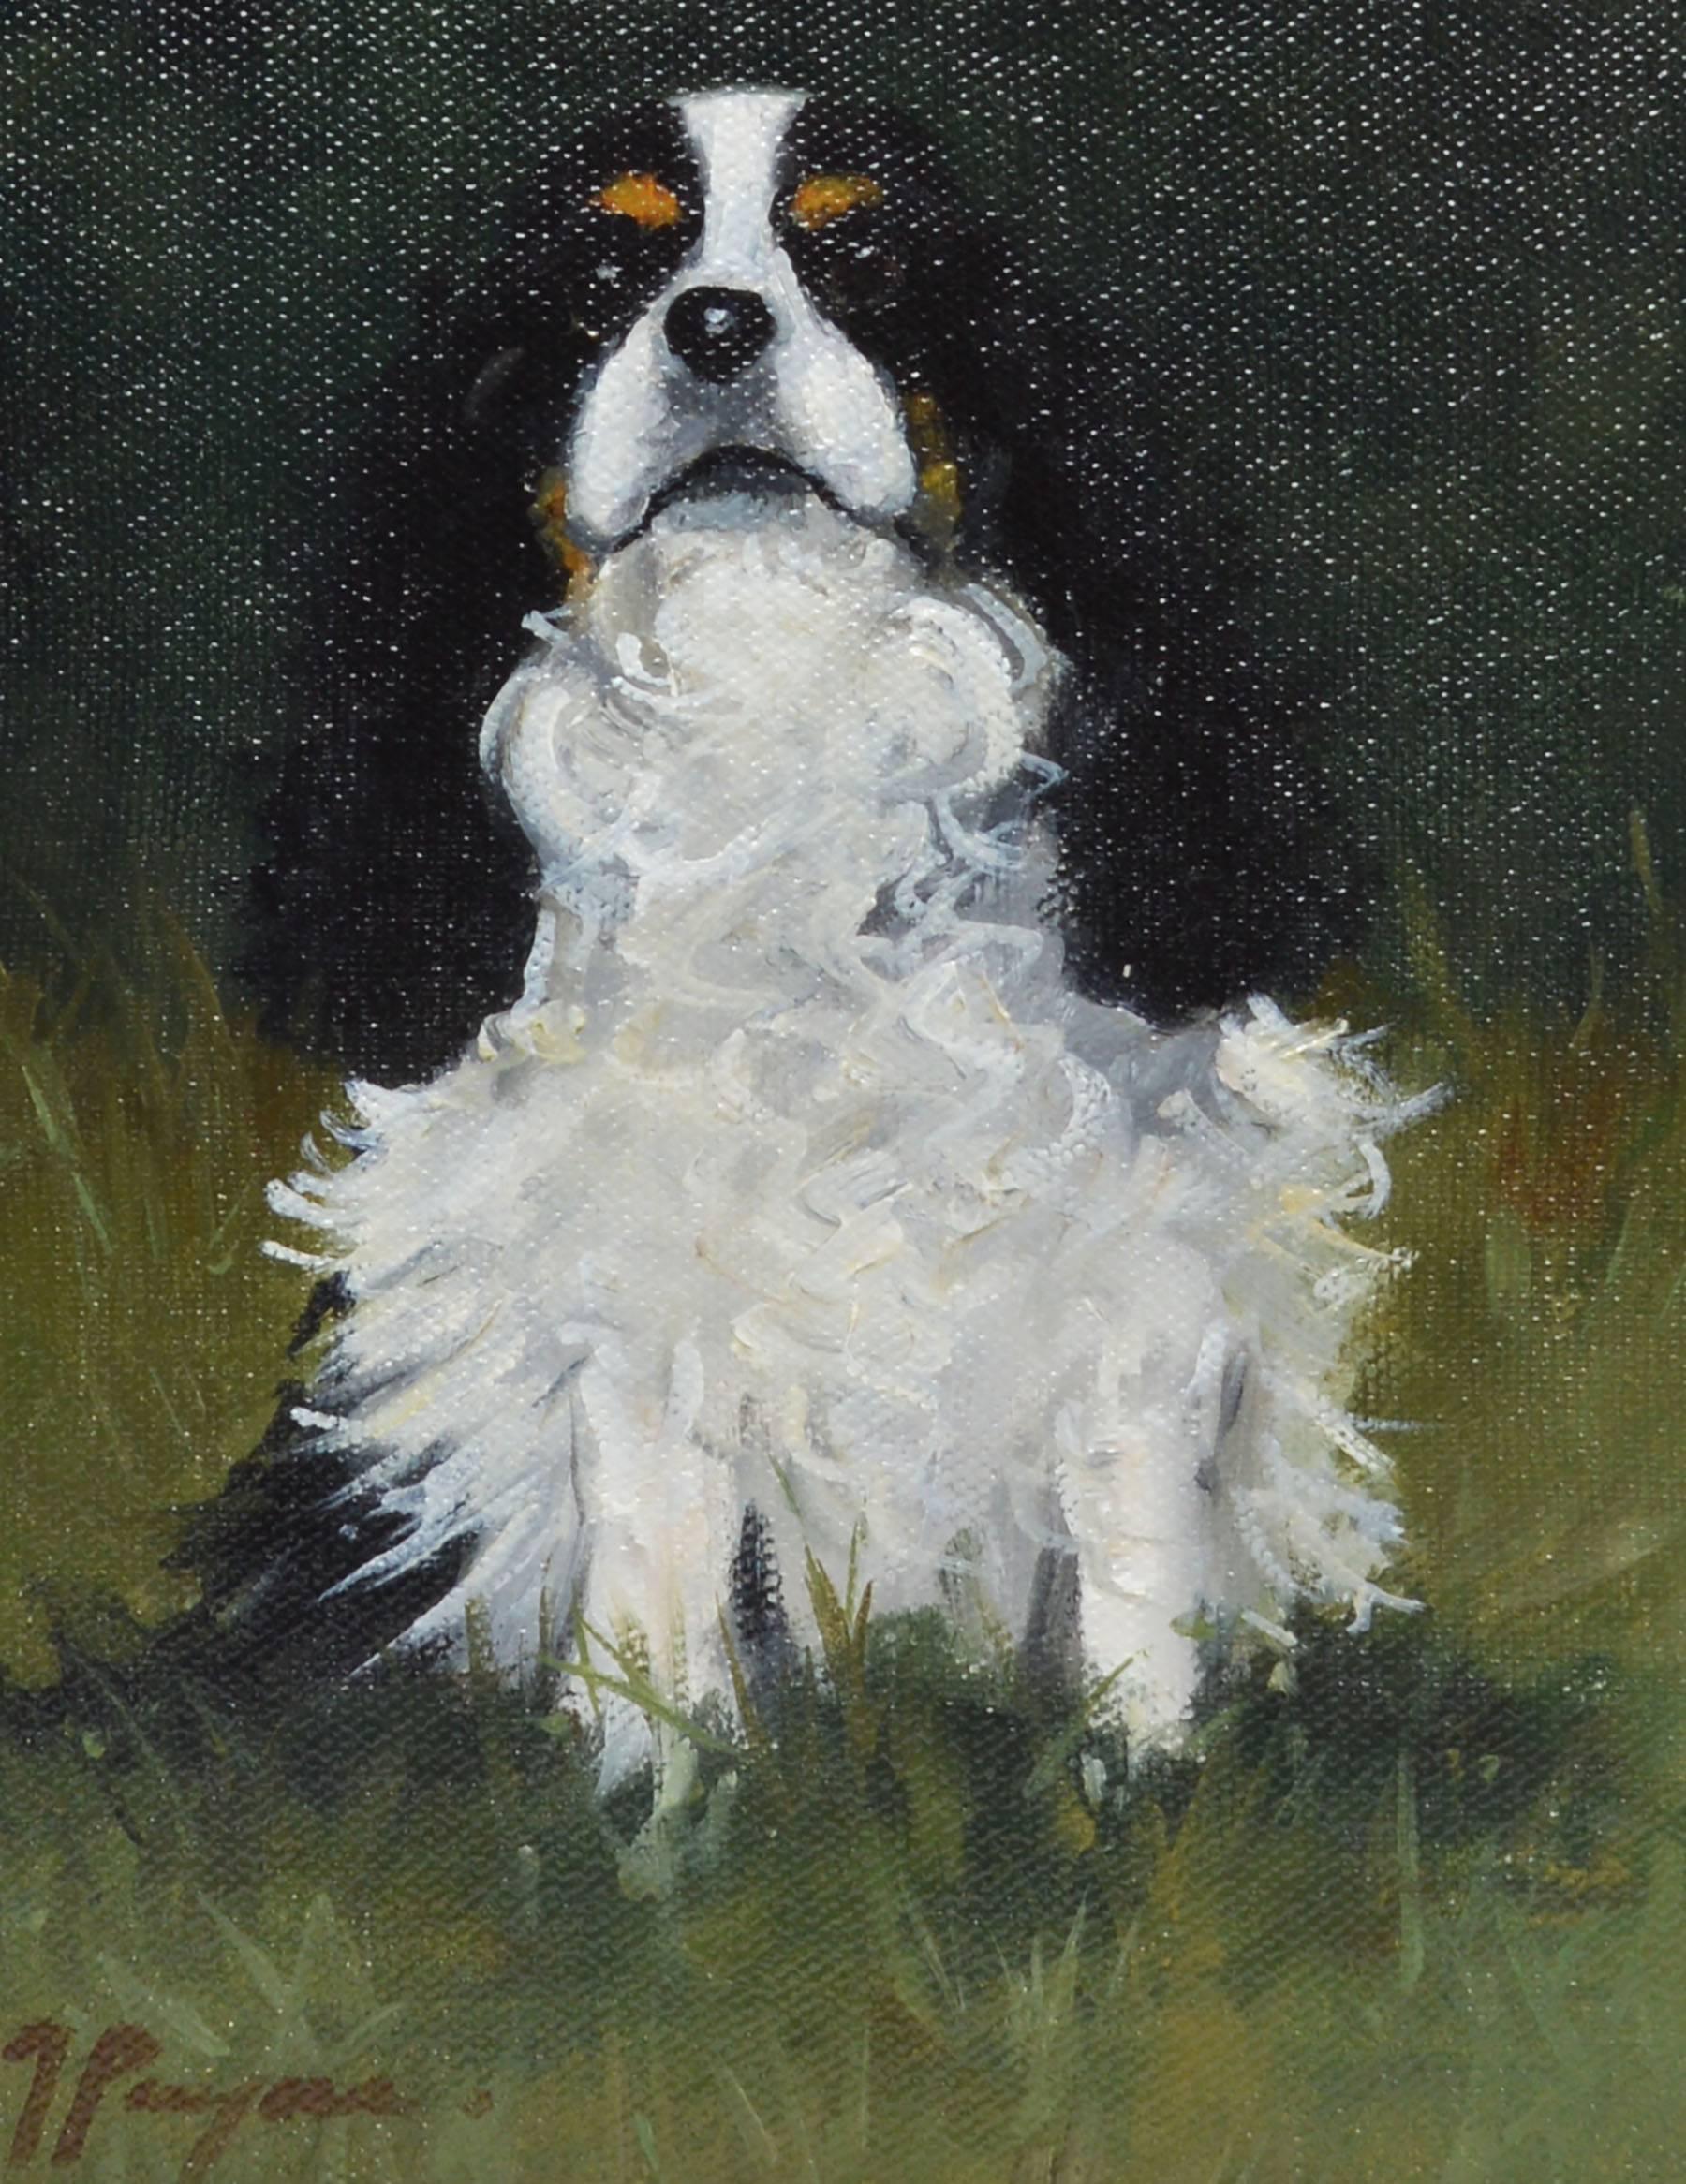 American School Impressionist Portrait of a King Charles Cavalier Spaniel Dog 1